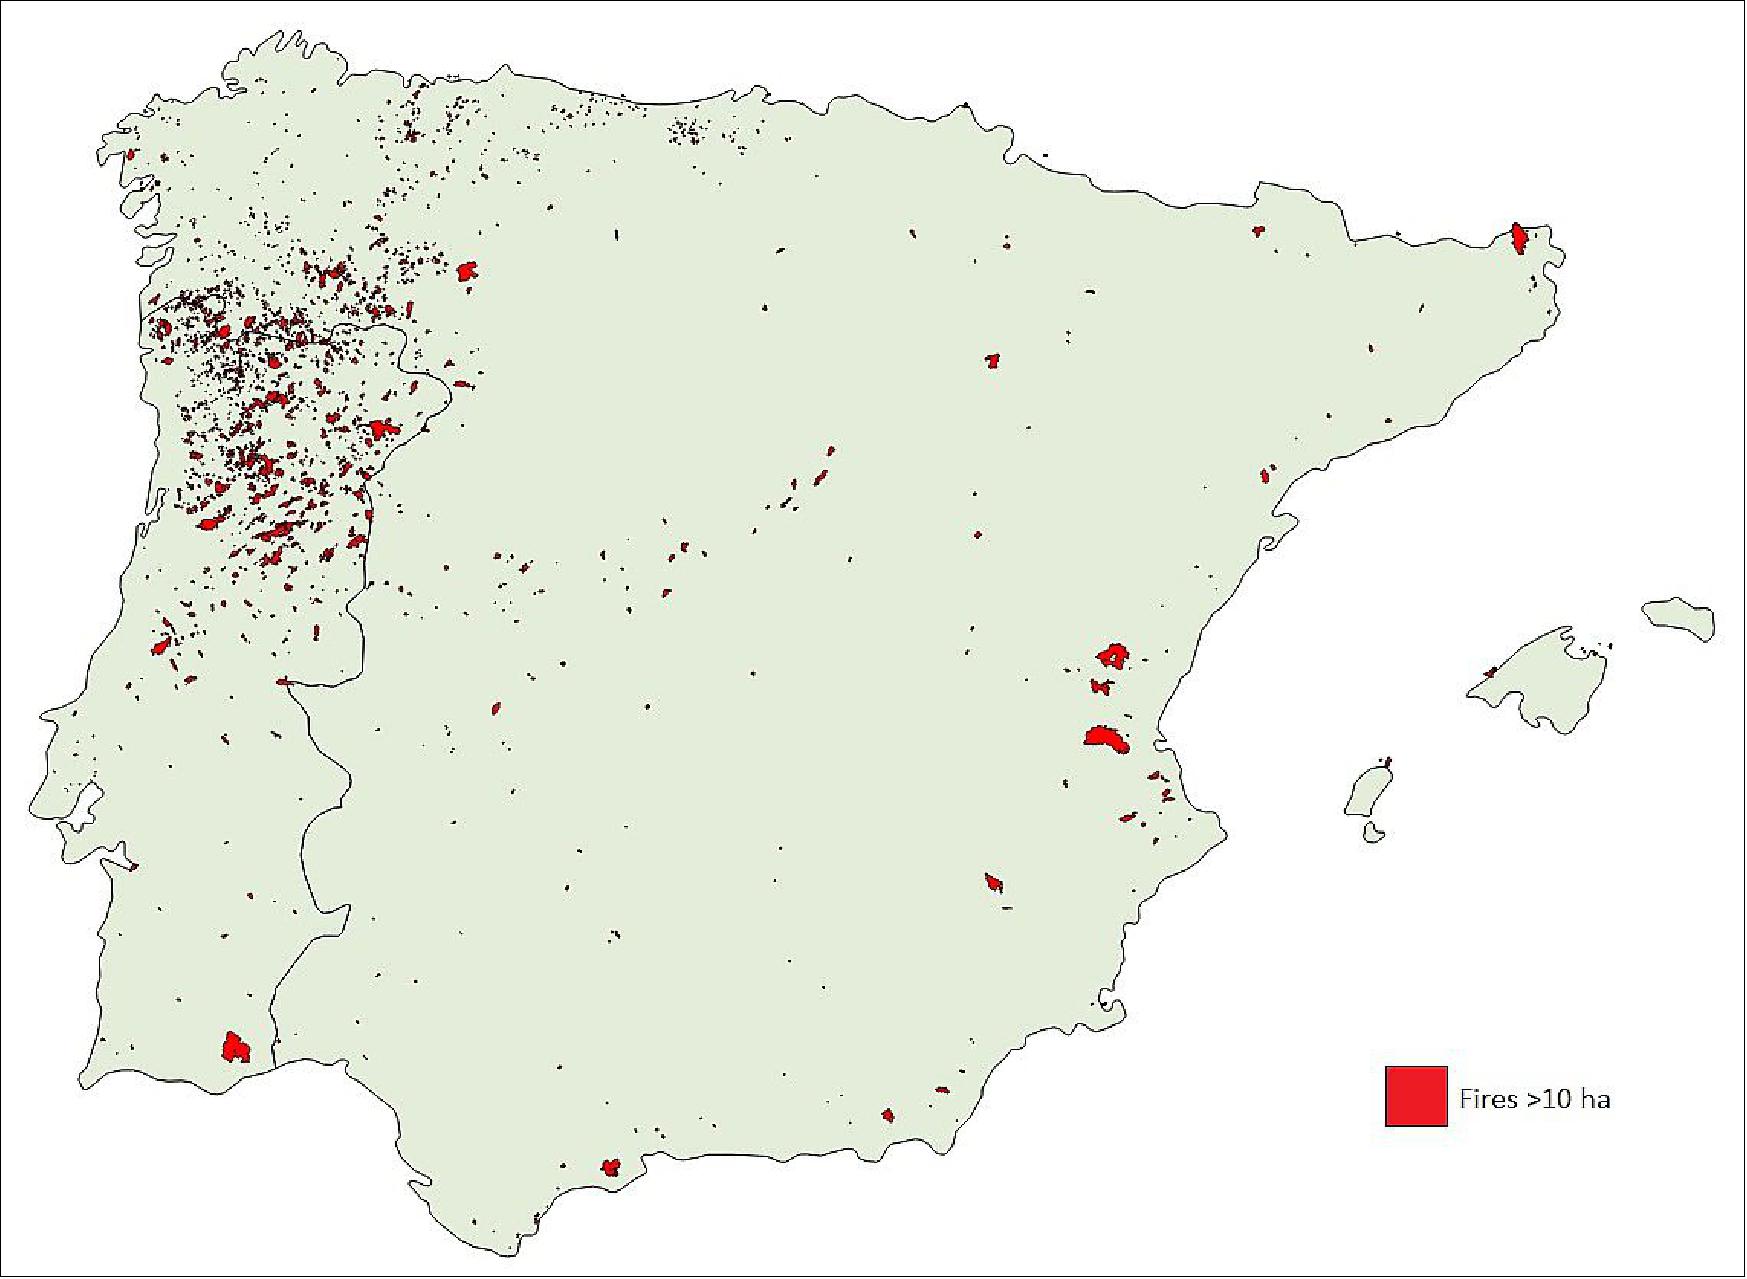 Figure 64: Fires on the Iberian Peninsula in the timeframe 2010-2014 (image credit: Deputació de Barcelona)